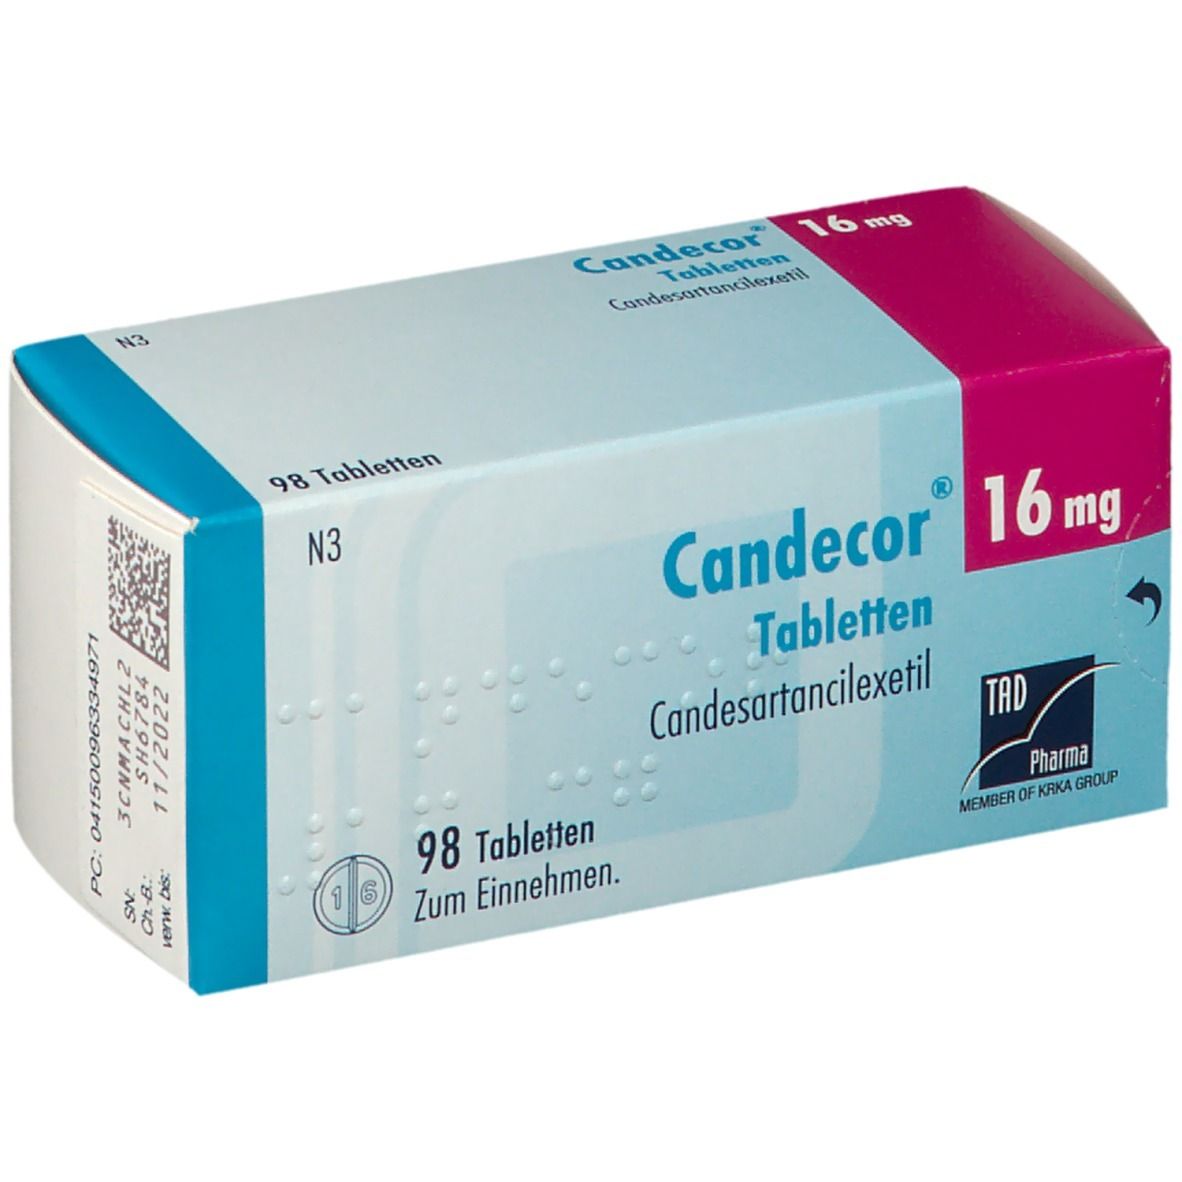 Candecor® 16 mg